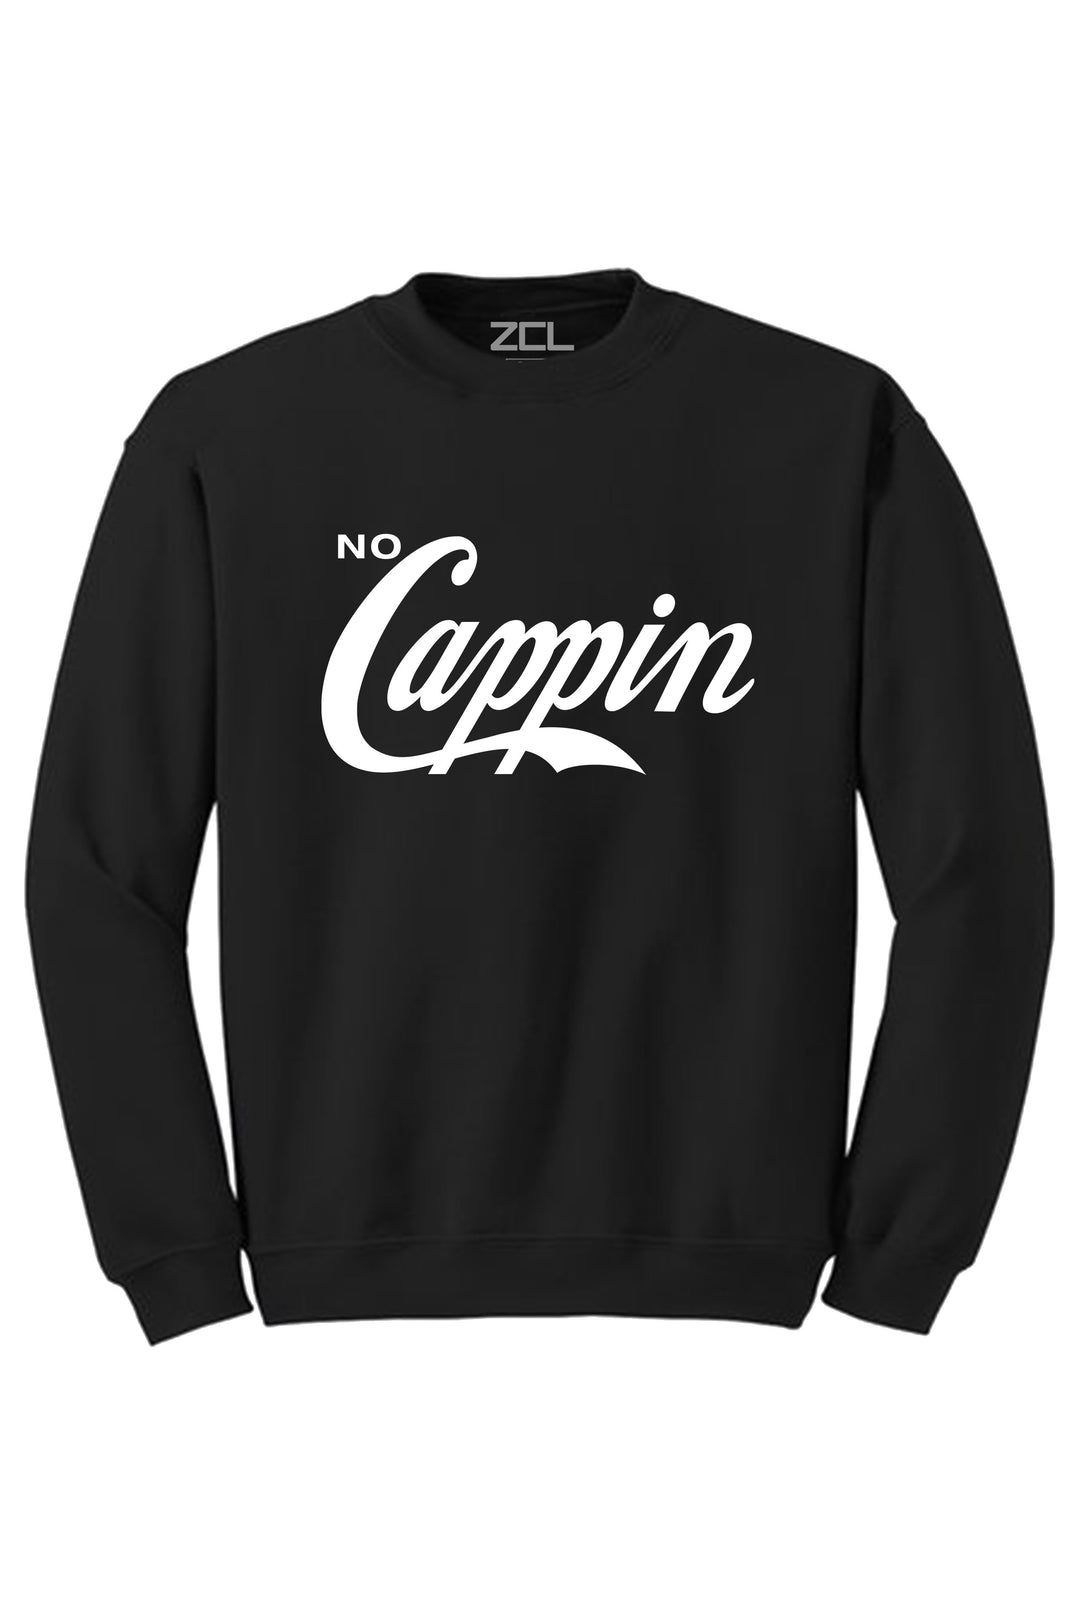 No Cappin Crewneck Sweatshirt (White Logo) - Zamage